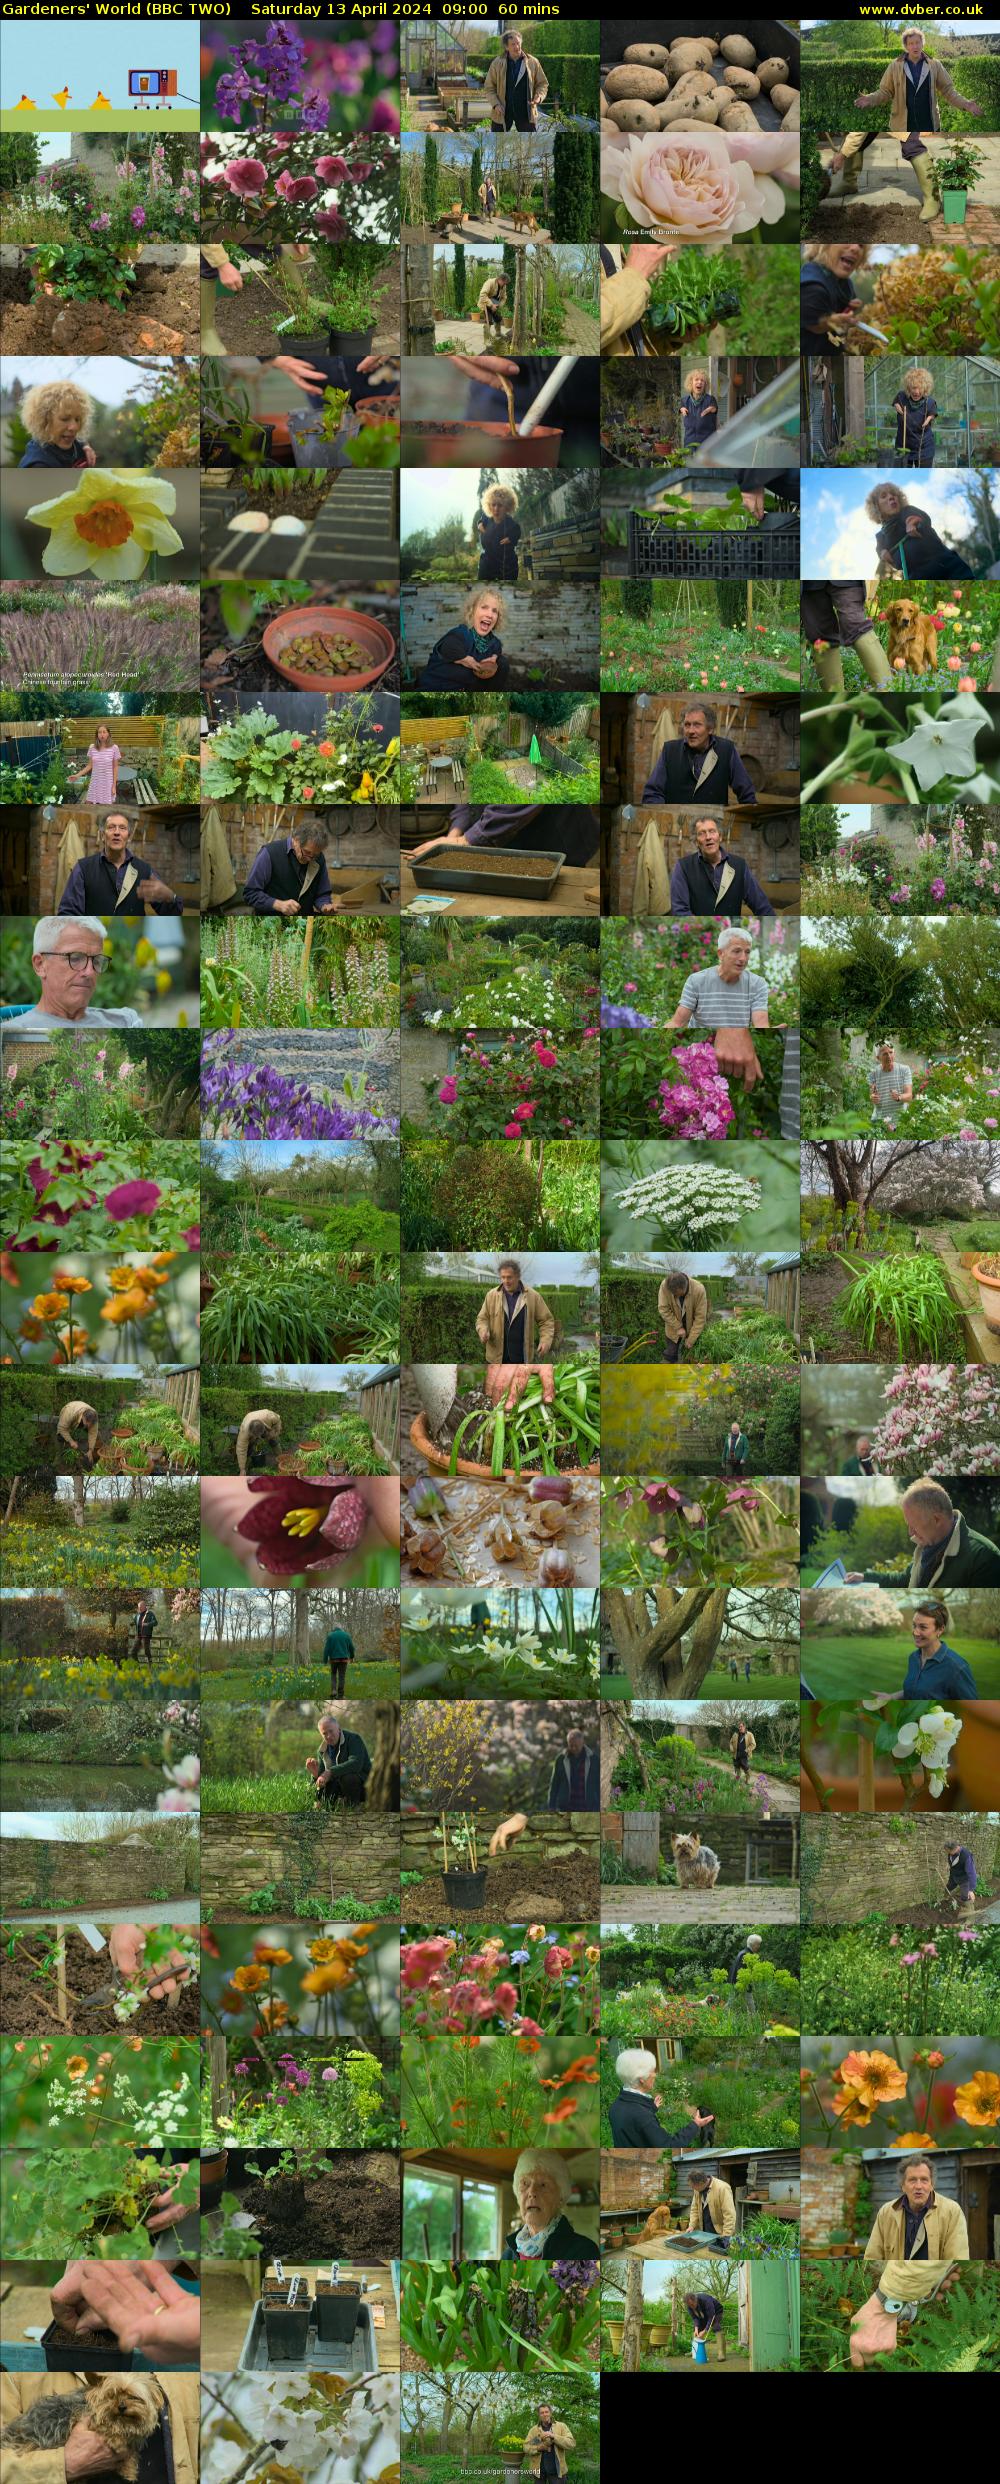 Gardeners' World (BBC TWO) Saturday 13 April 2024 09:00 - 10:00